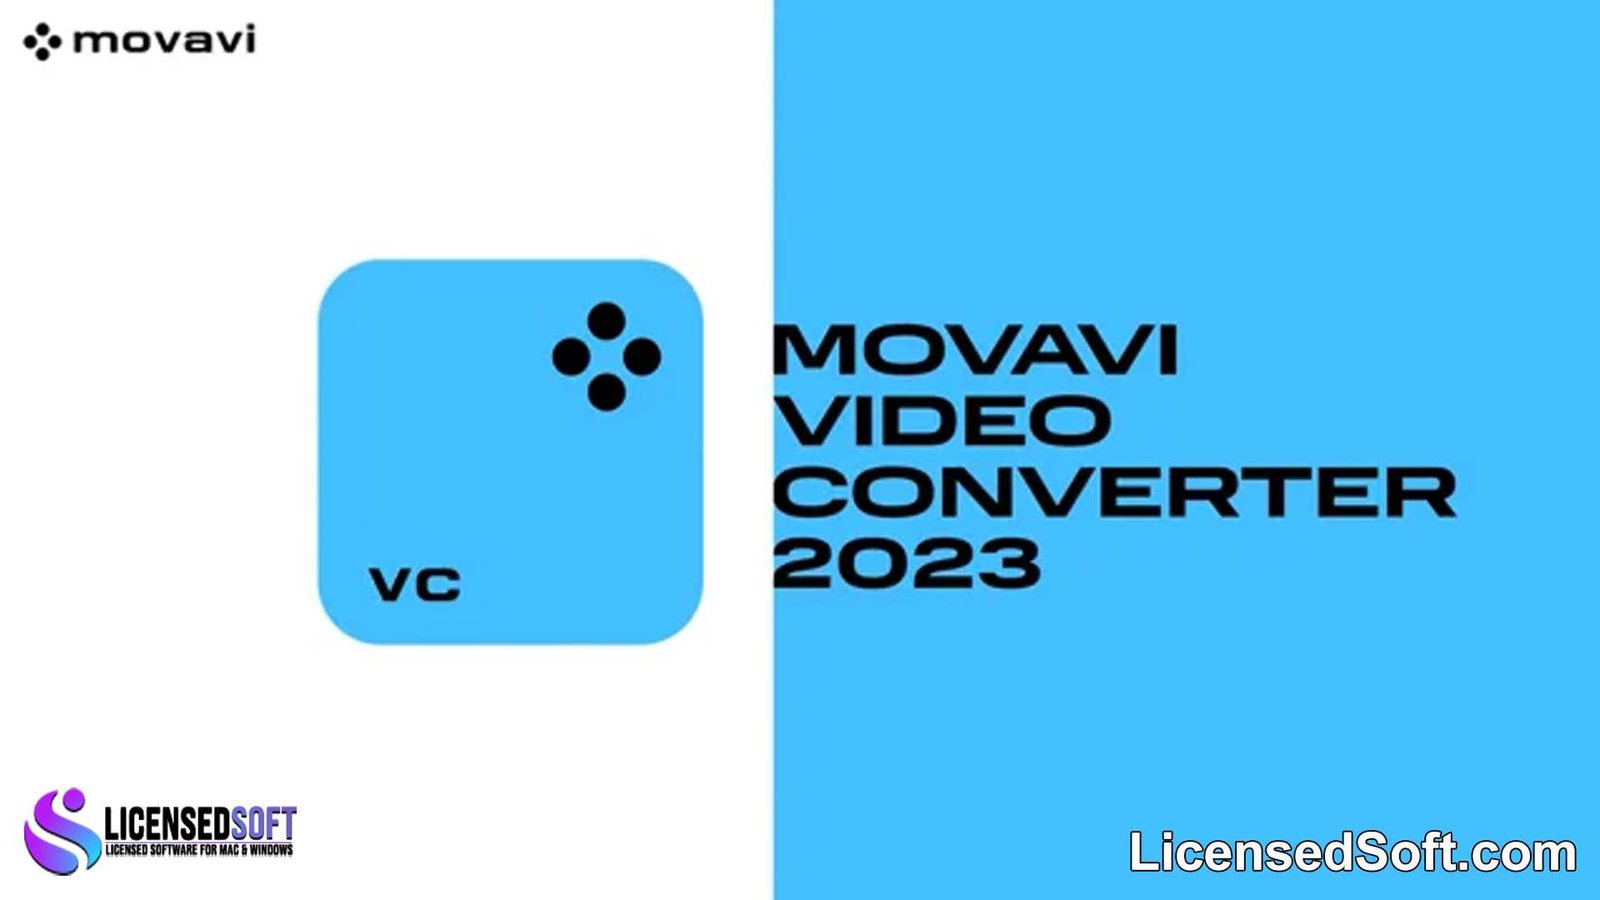 Movavi Video Converter 22.5.0 Lifetime Premium License By LicensedSoft